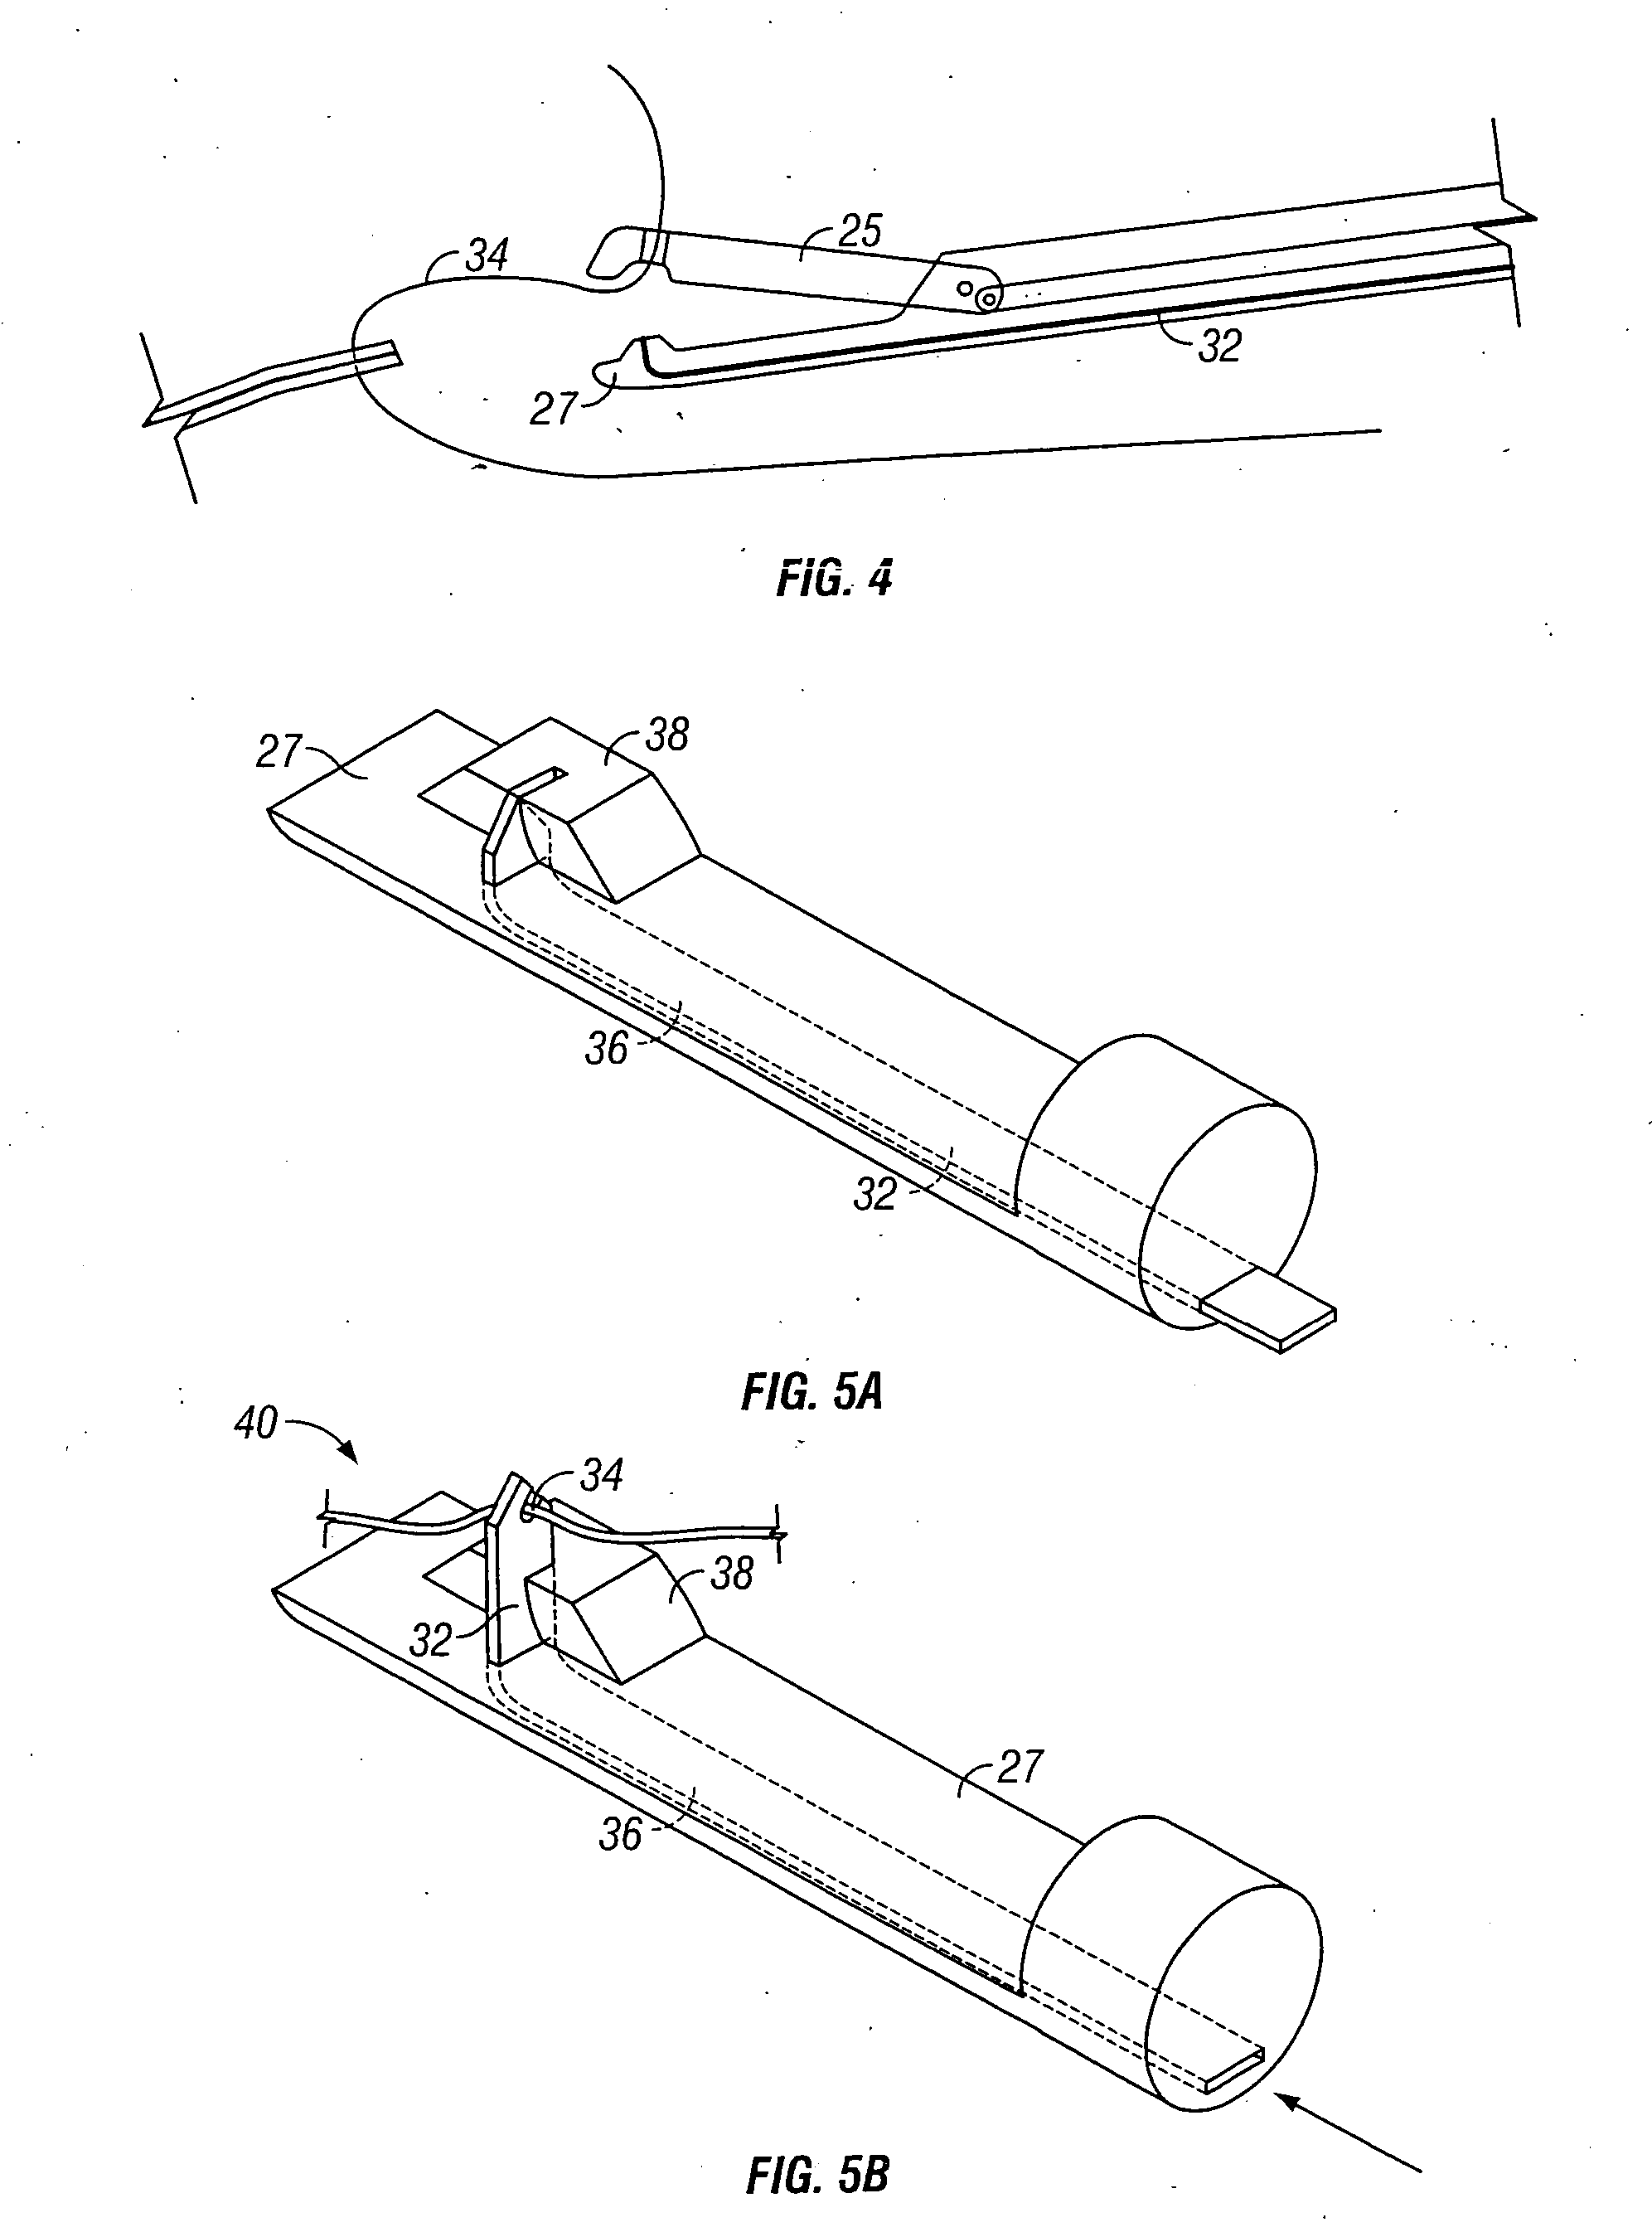 Suturing apparatus and method